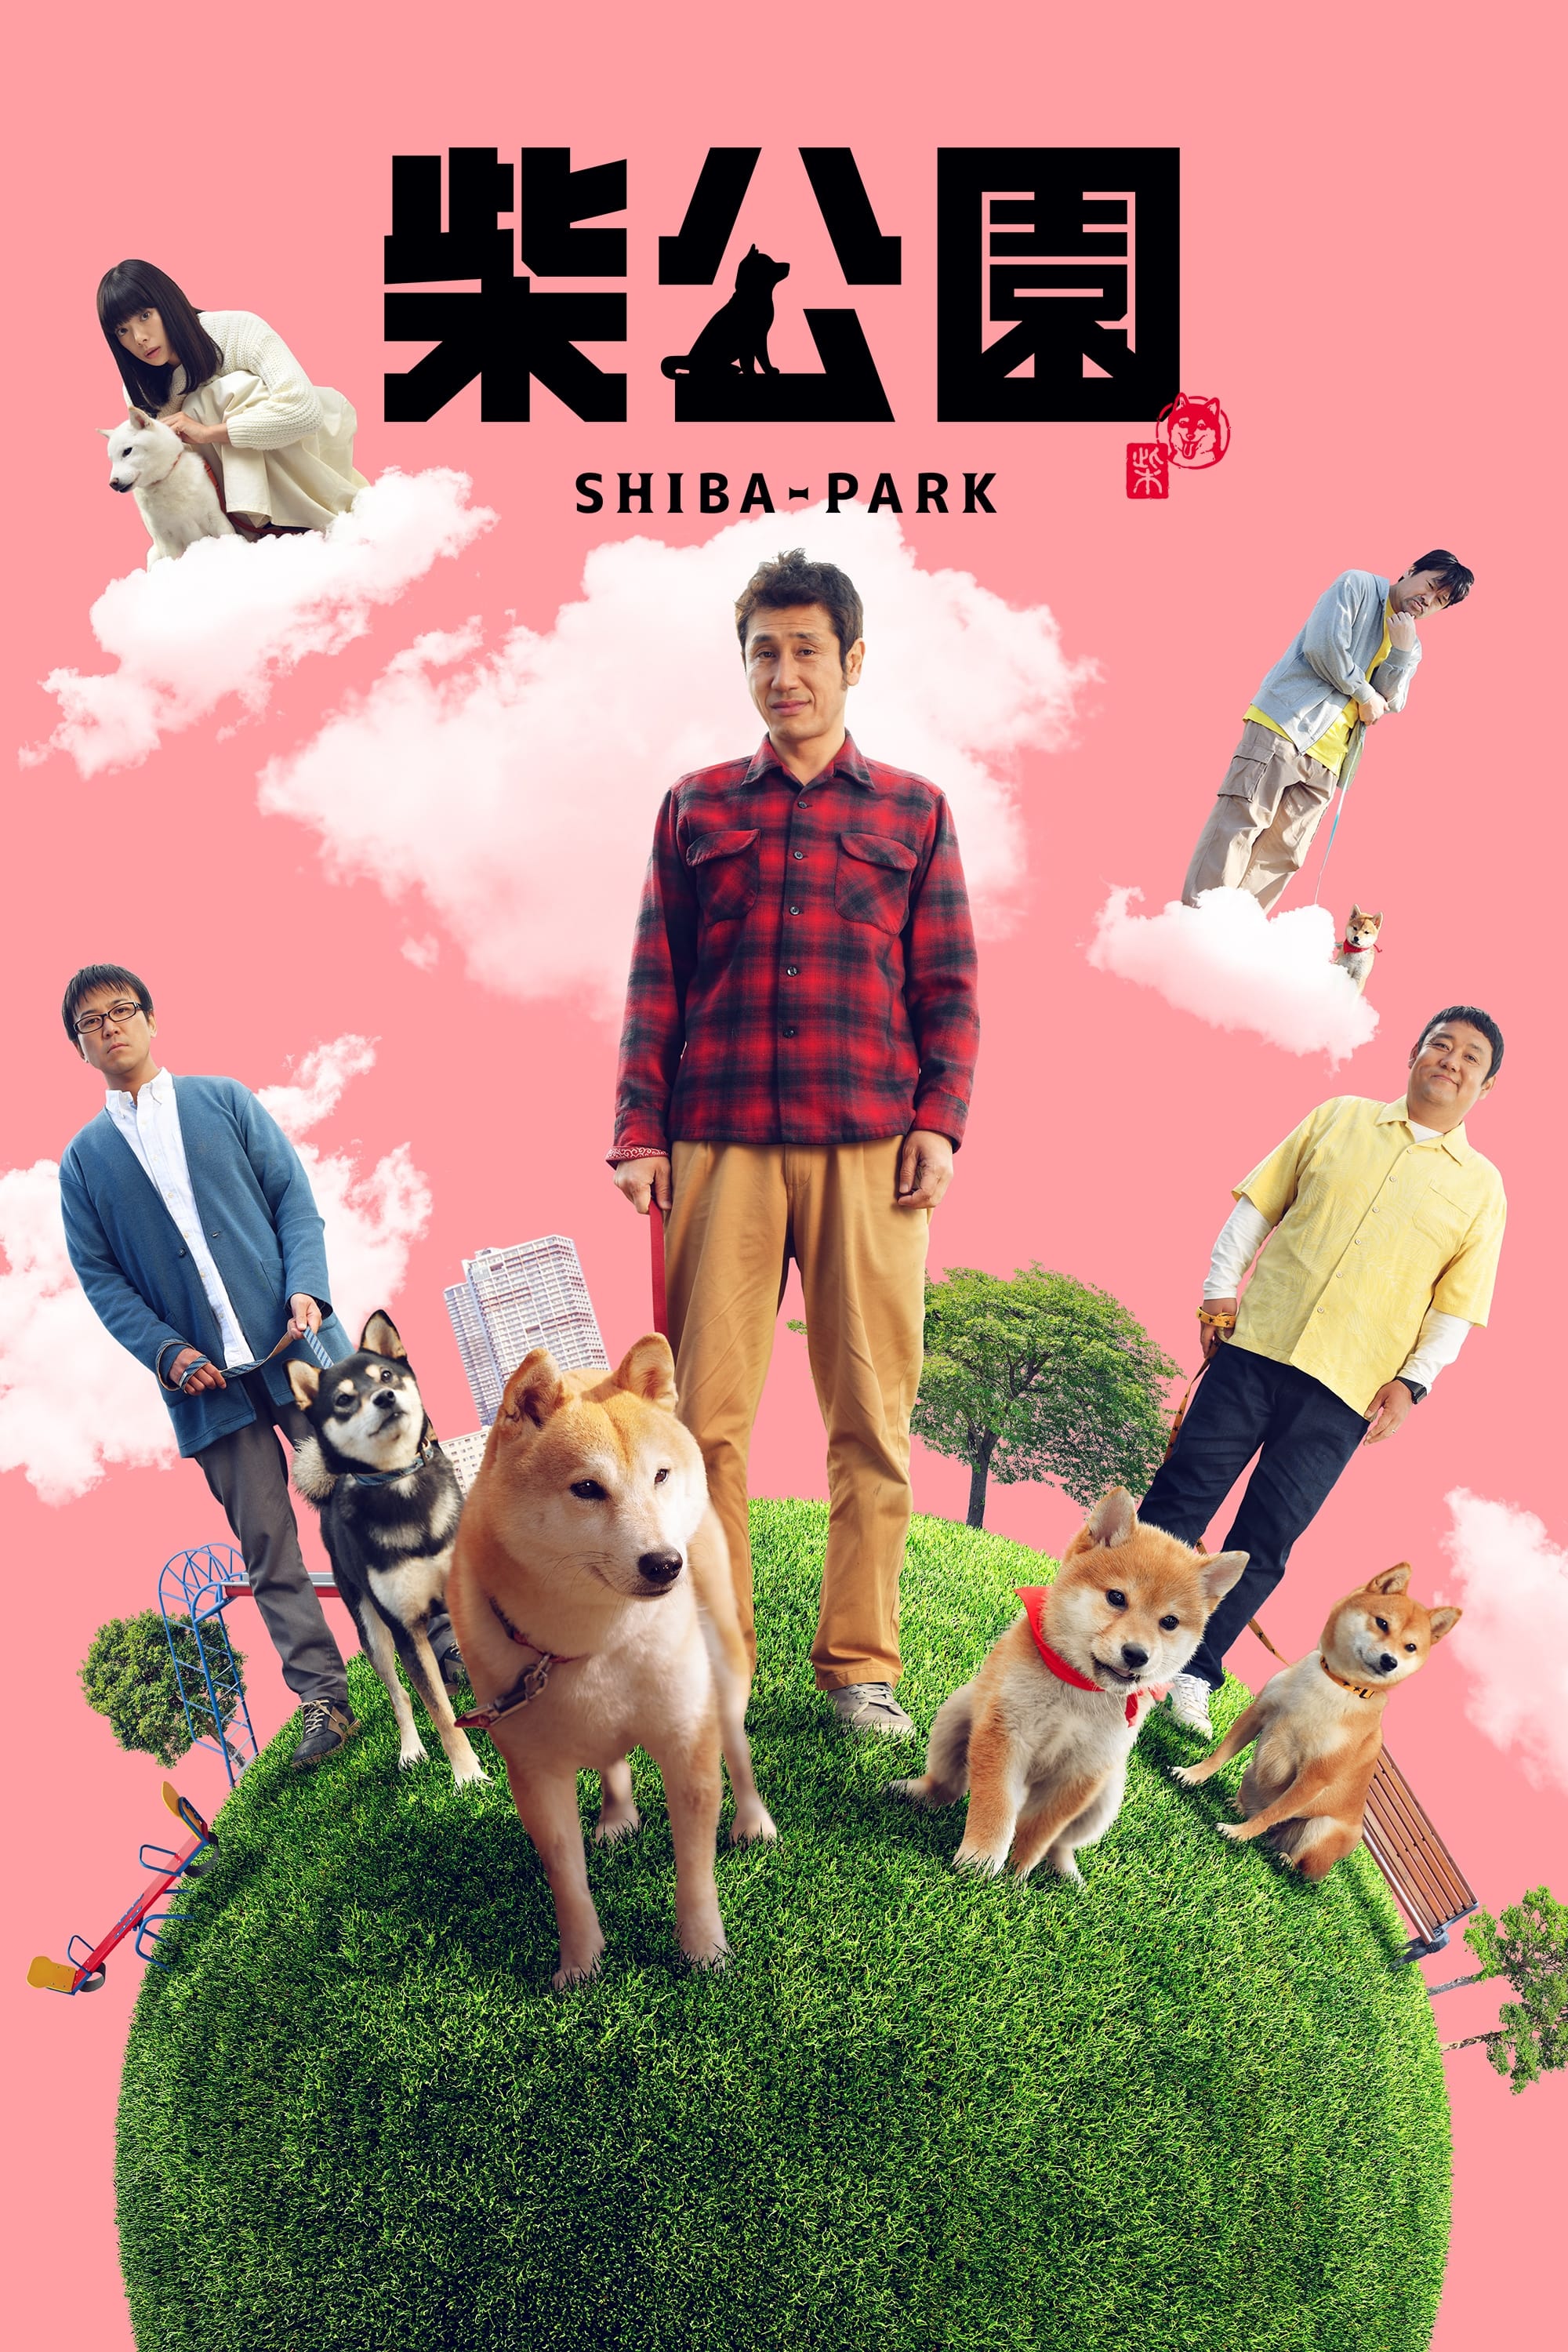 Shiba Park (2019)